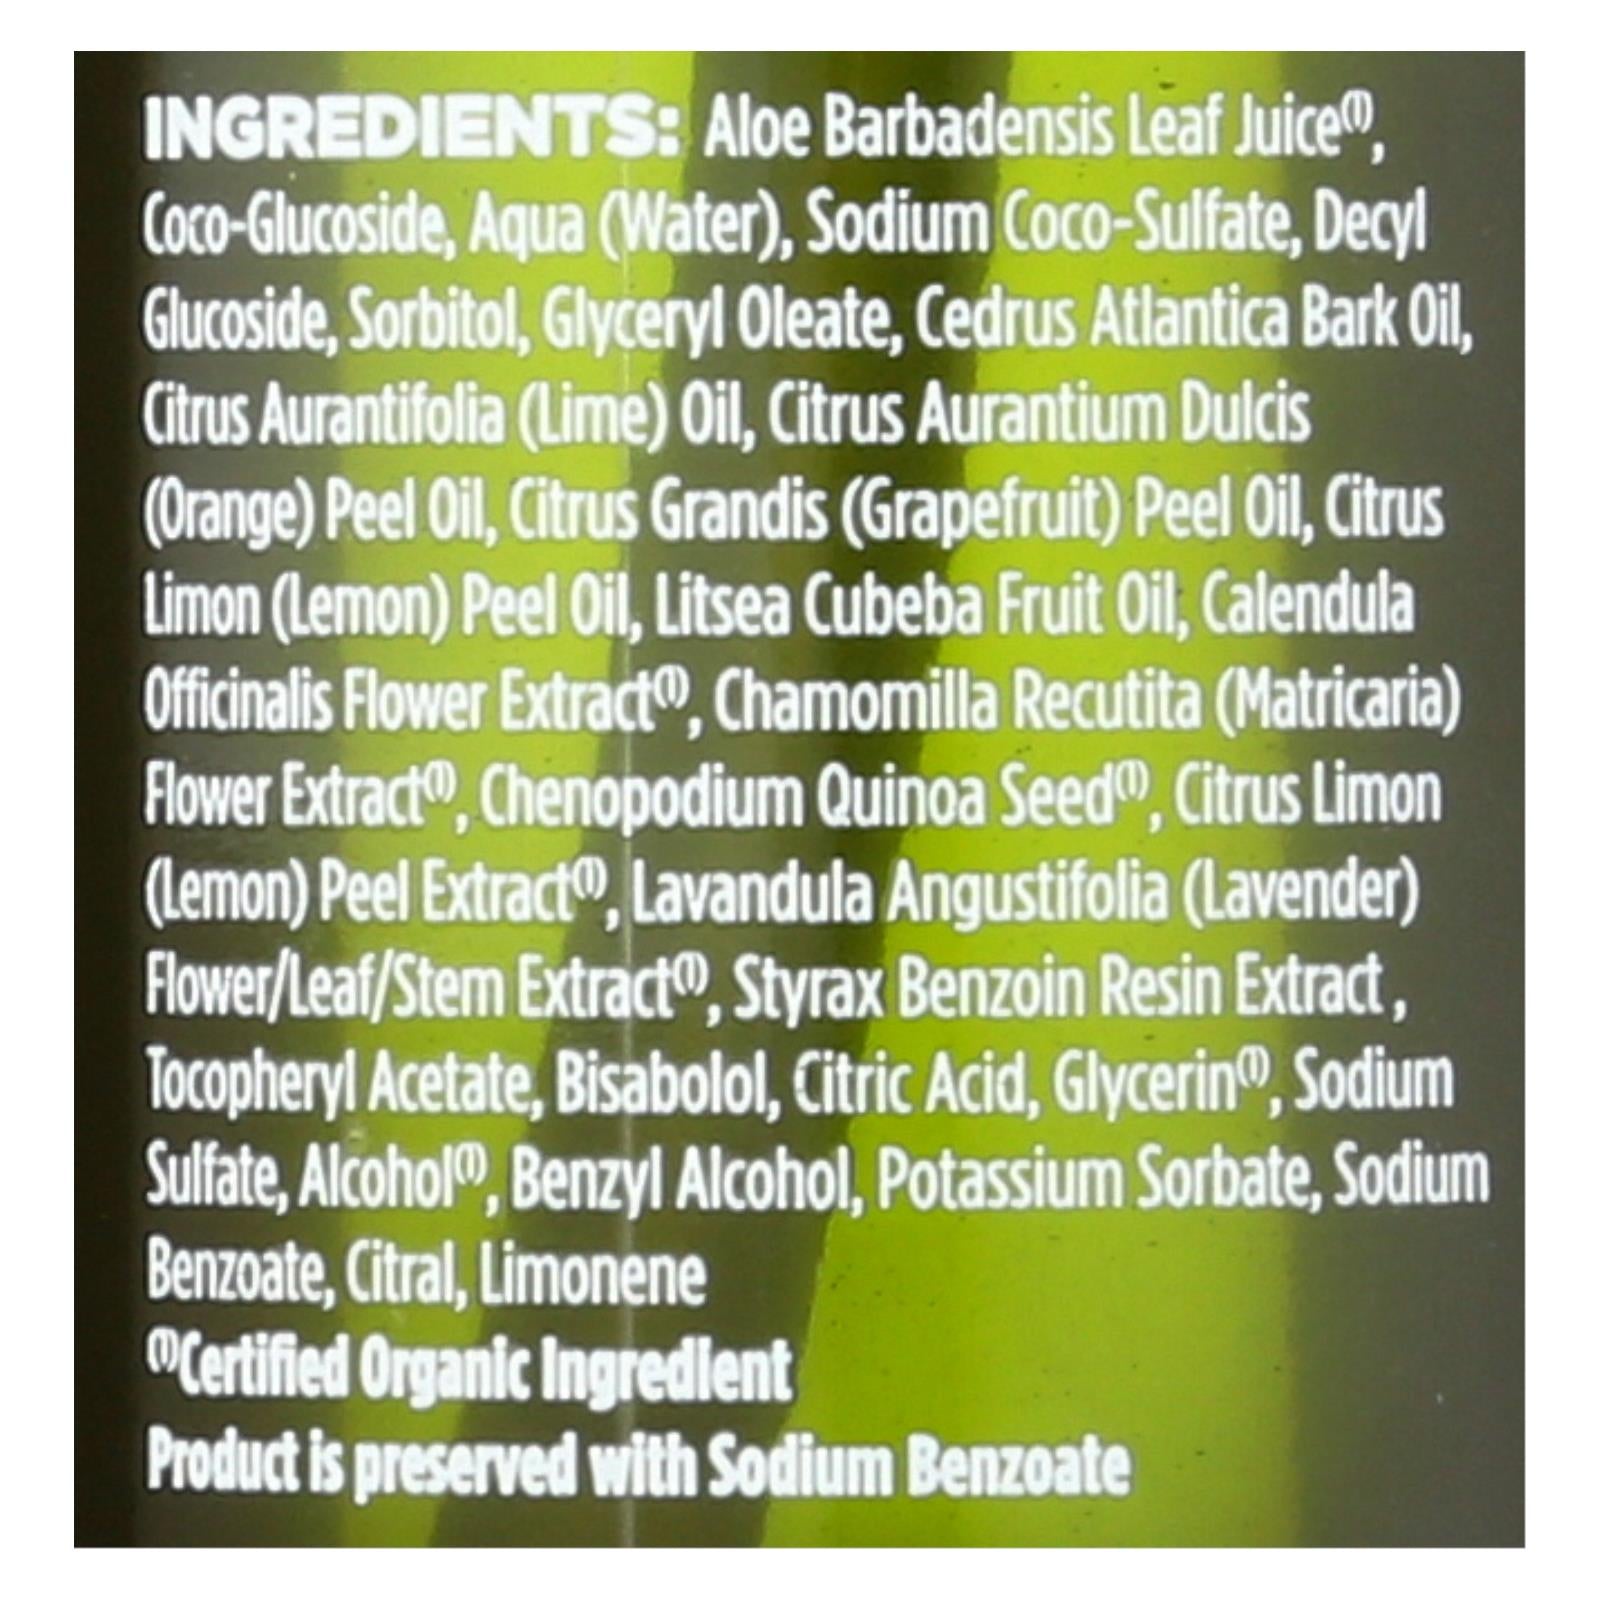 Avalon, Avalon Organics Glycerin Liquid Hand Soap Lemon - 12 fl oz